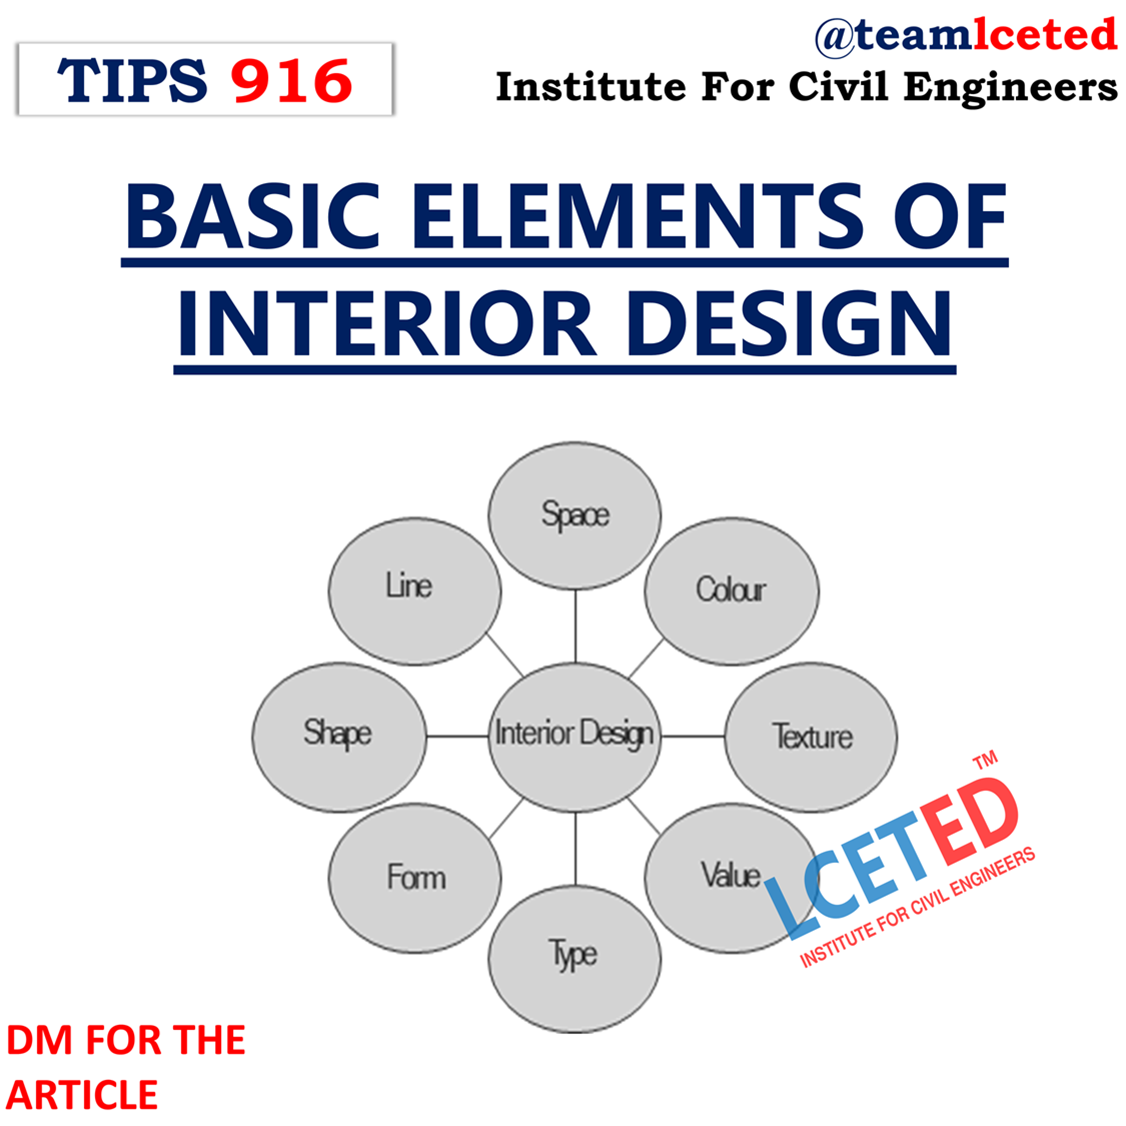 BASIC ELEMENTS OF INTERIOR DESIGN